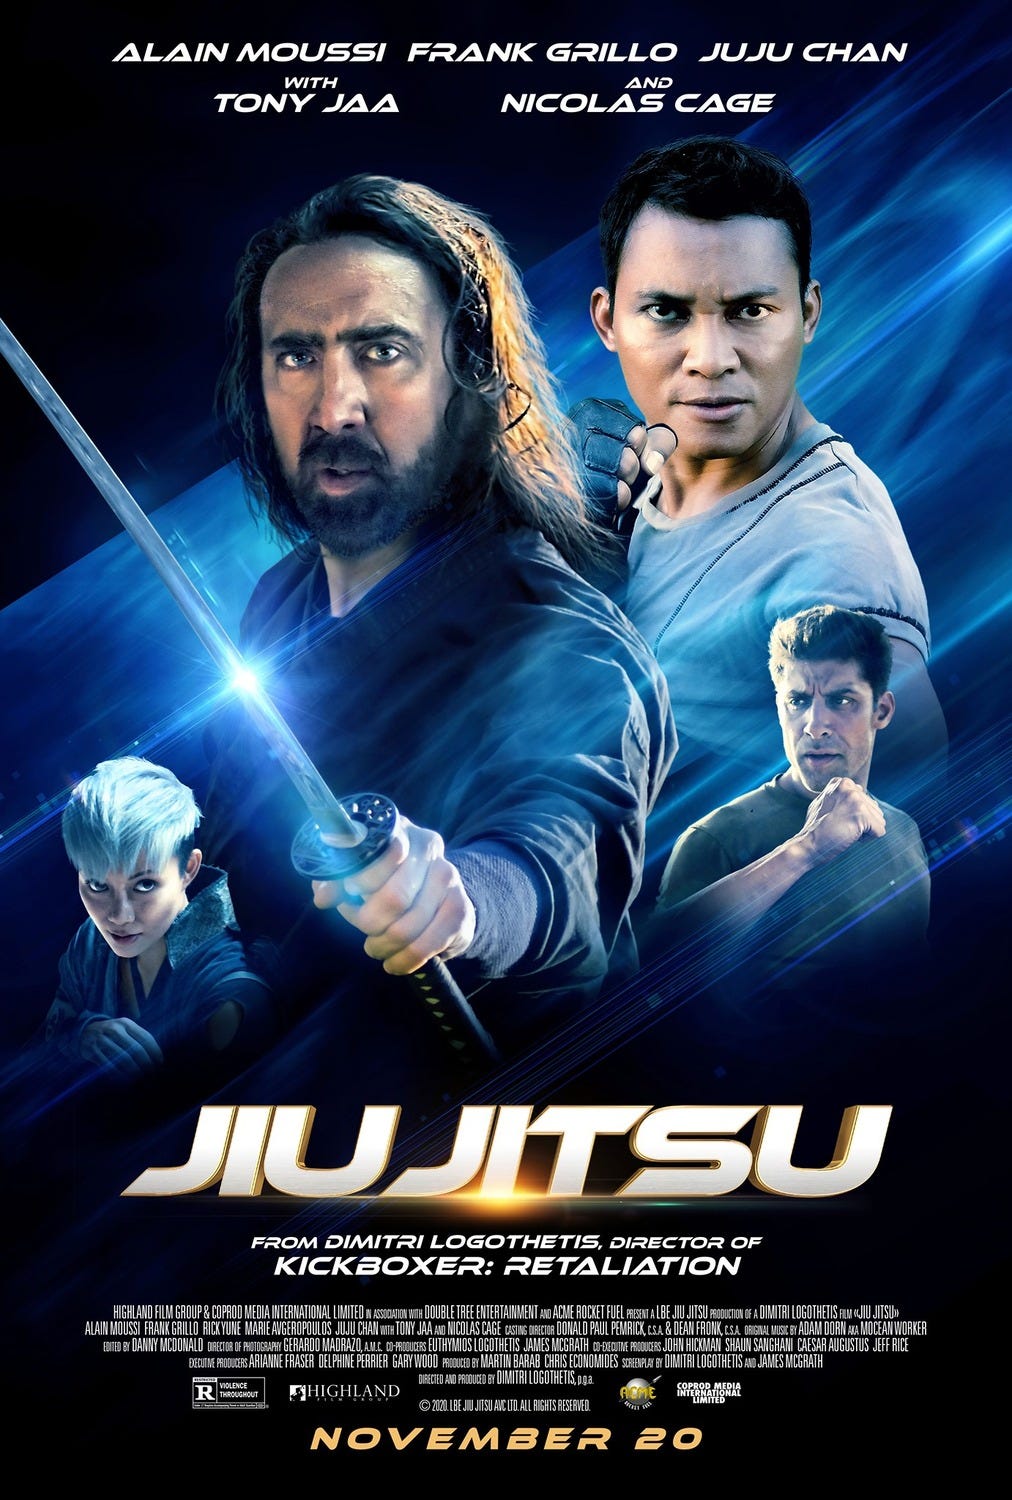 Sledujte] →Jiu Jitsu Celý Film →( 2020 ) CZ dabing — Filmy Online. | by  Asbakwadahsekar | Nov, 2020 | Medium